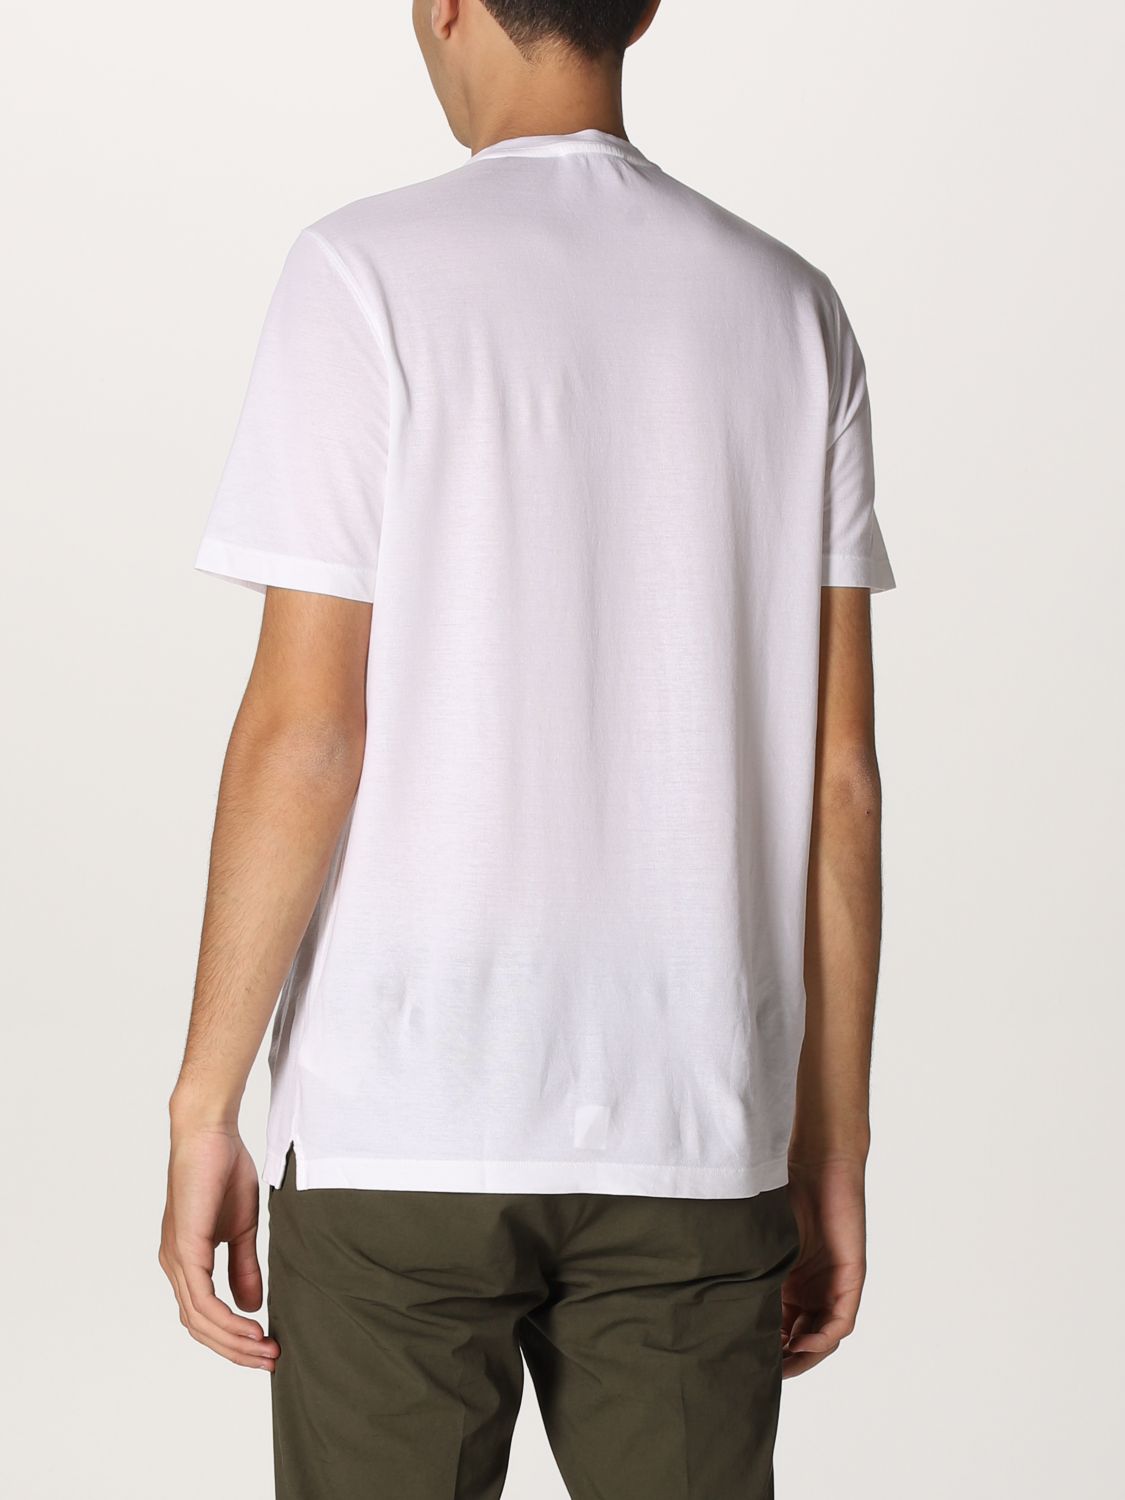 GRAN SASSO: basic cotton t-shirt - White | Gran Sasso t-shirt ...